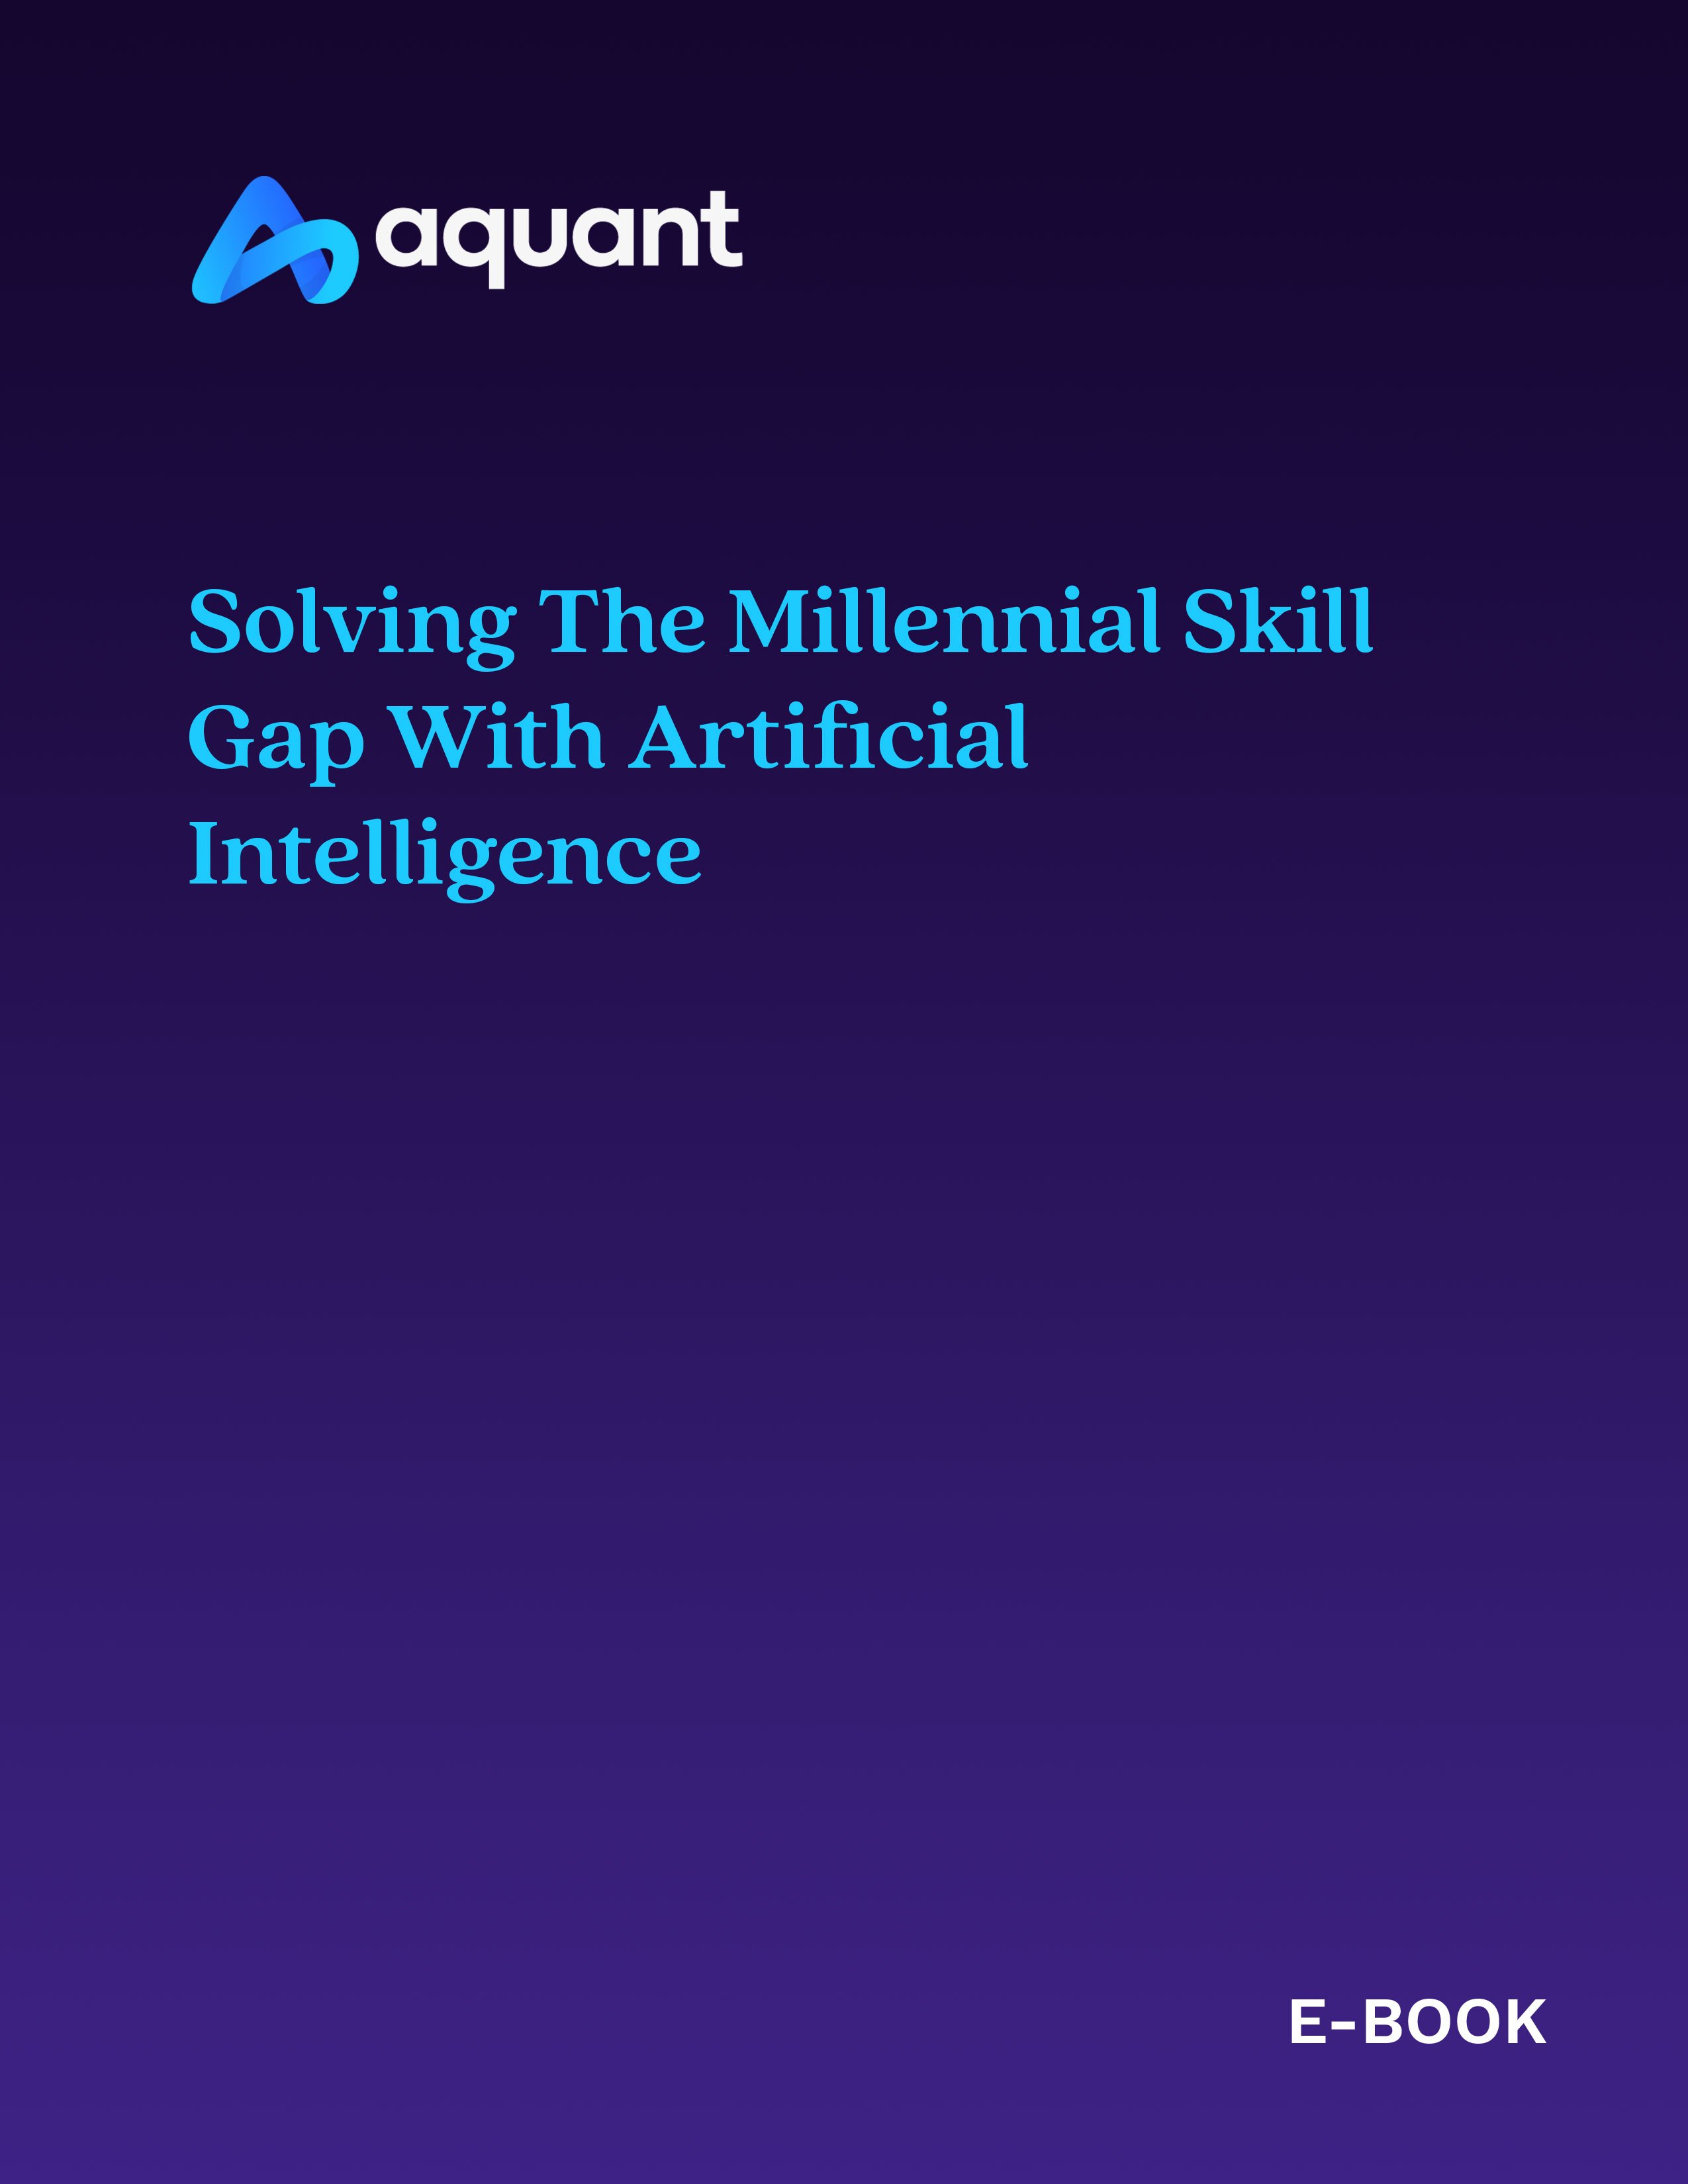 E-Books_Solving-the-Millennial-Skill-Gap-with-AI-thumbnail